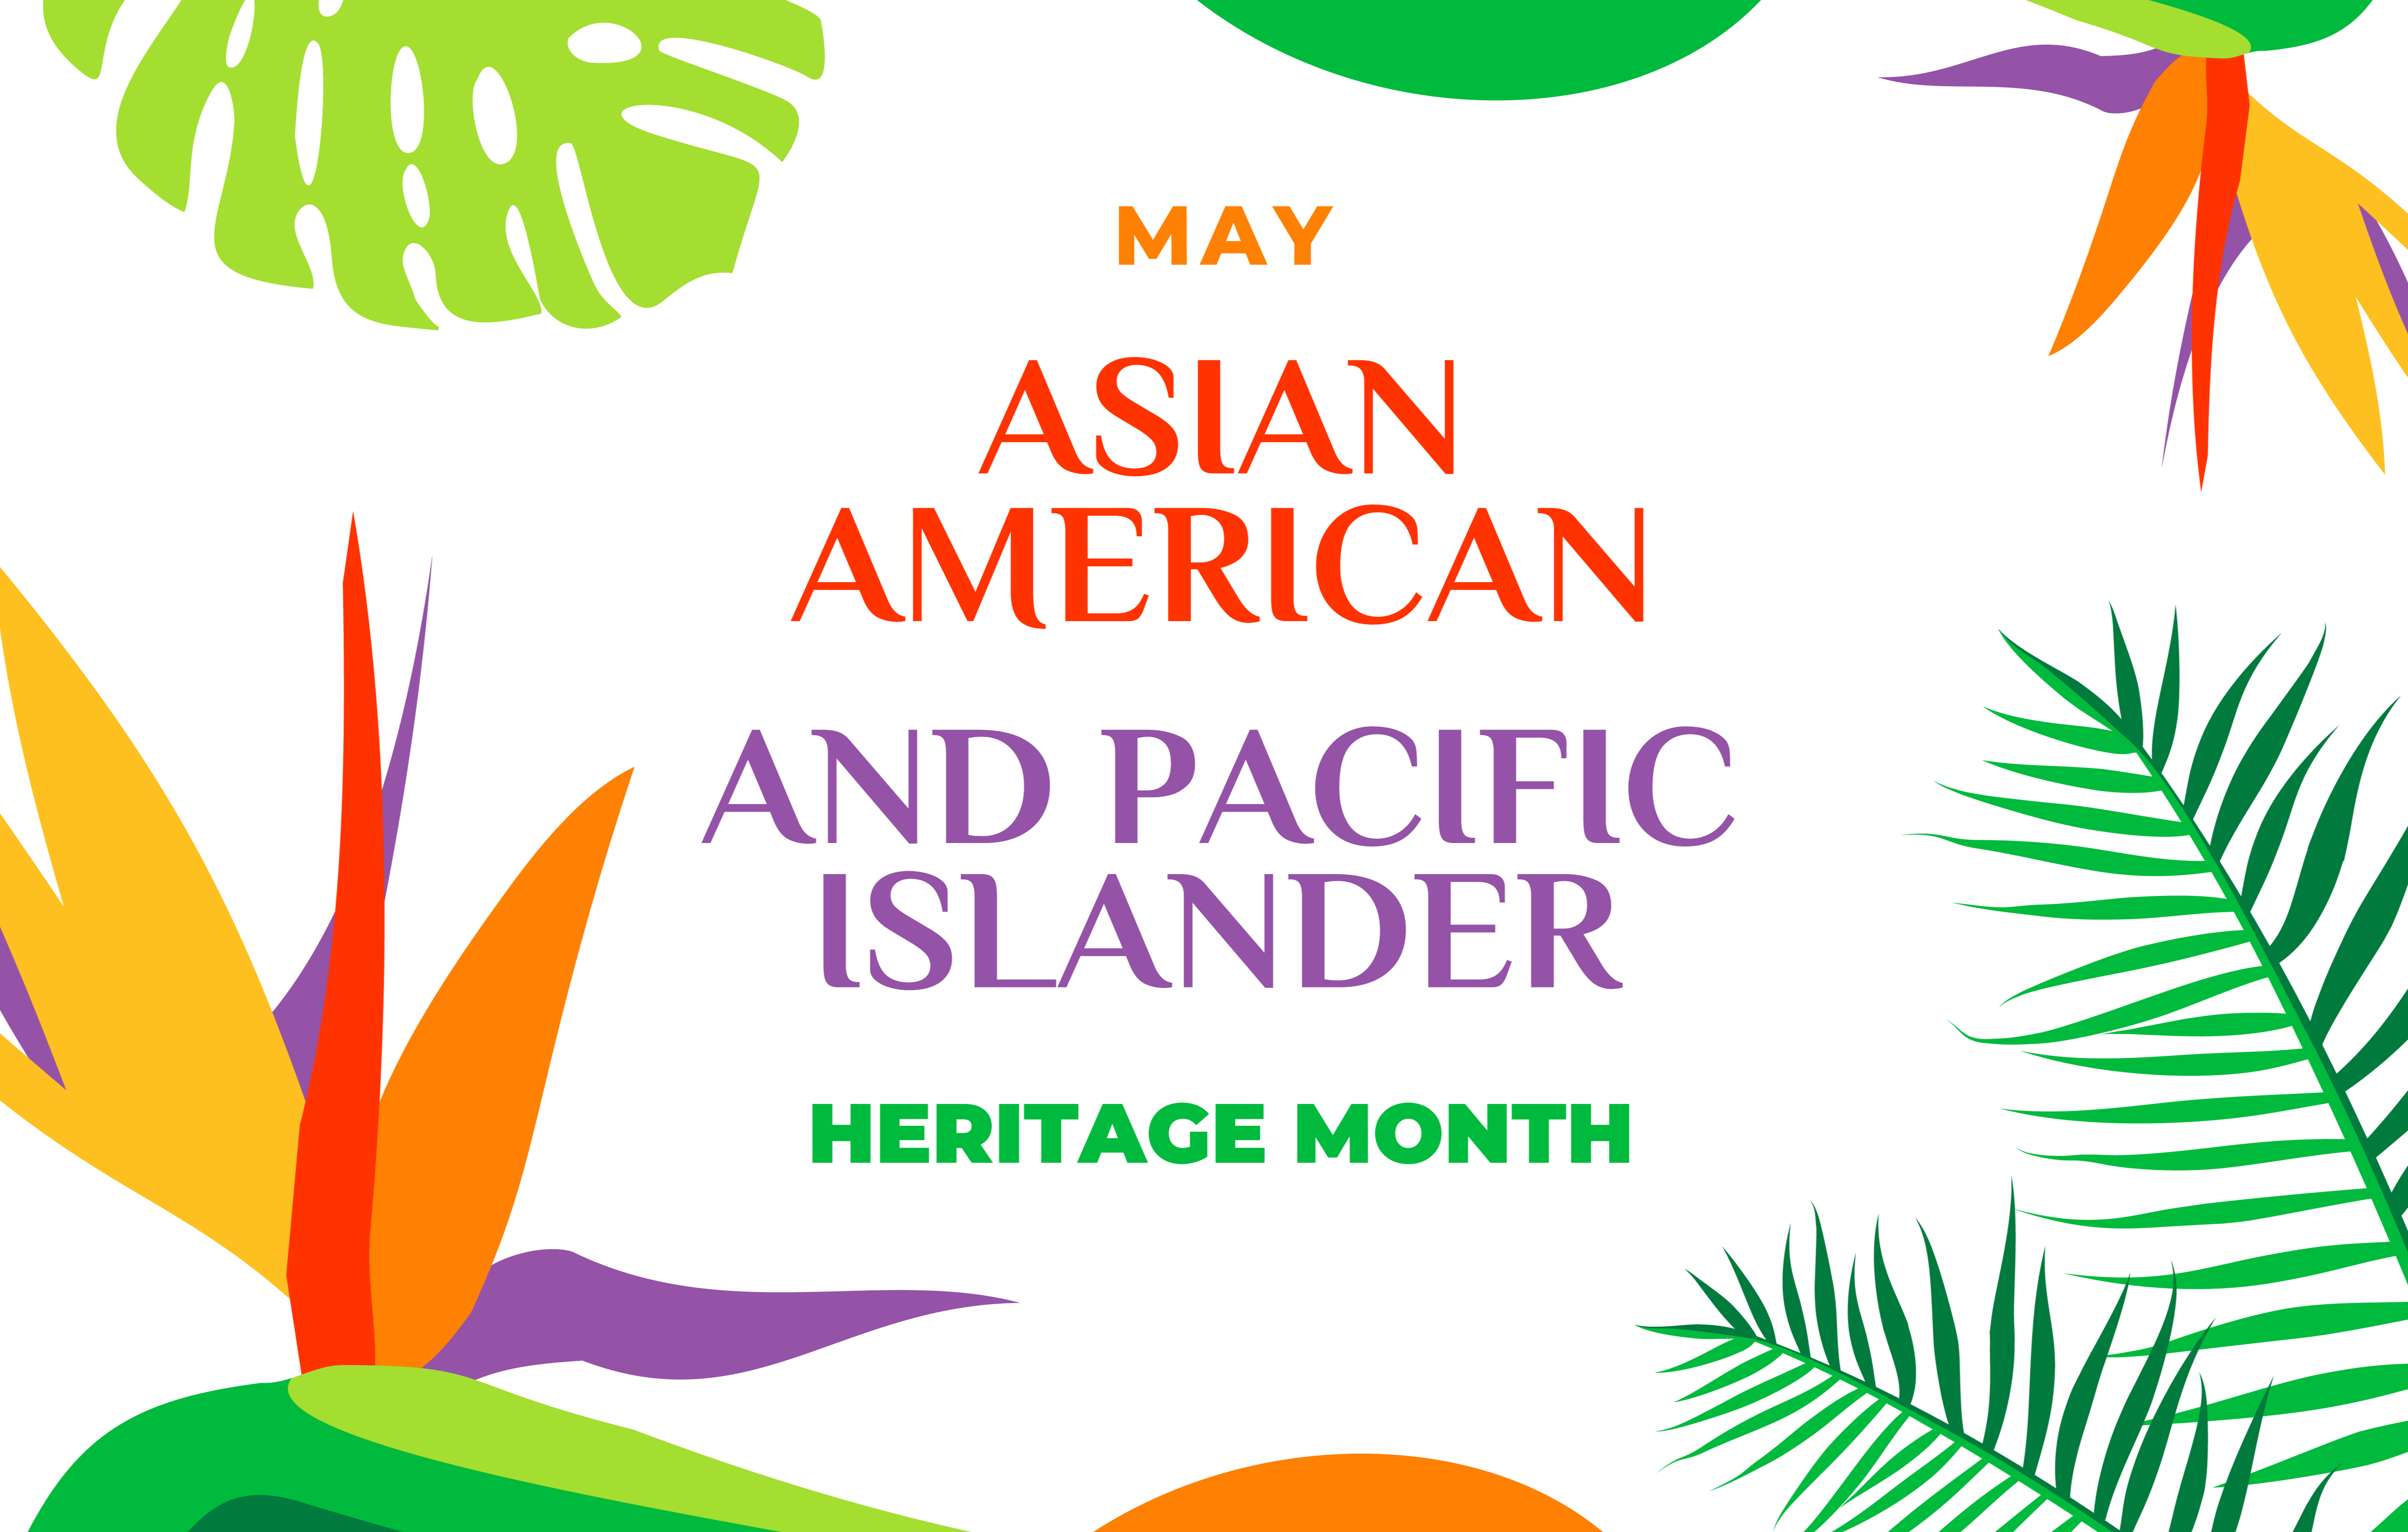 Asian American Pacific Islander Heritage Month